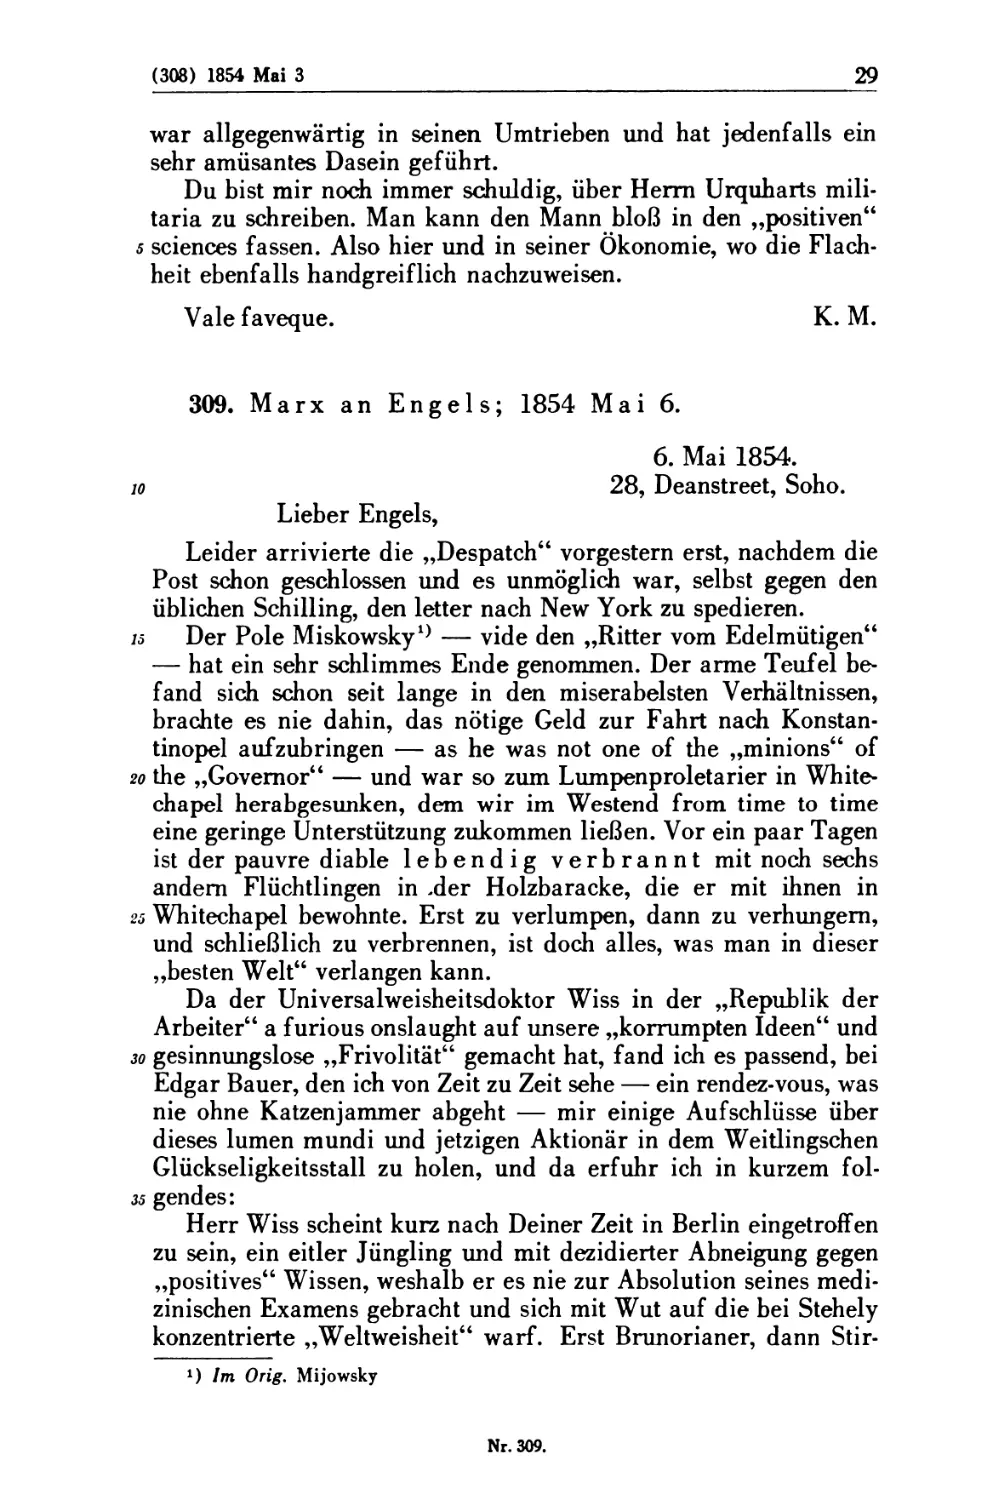 309. Marx an Engels; 1854 1854 Mai 6